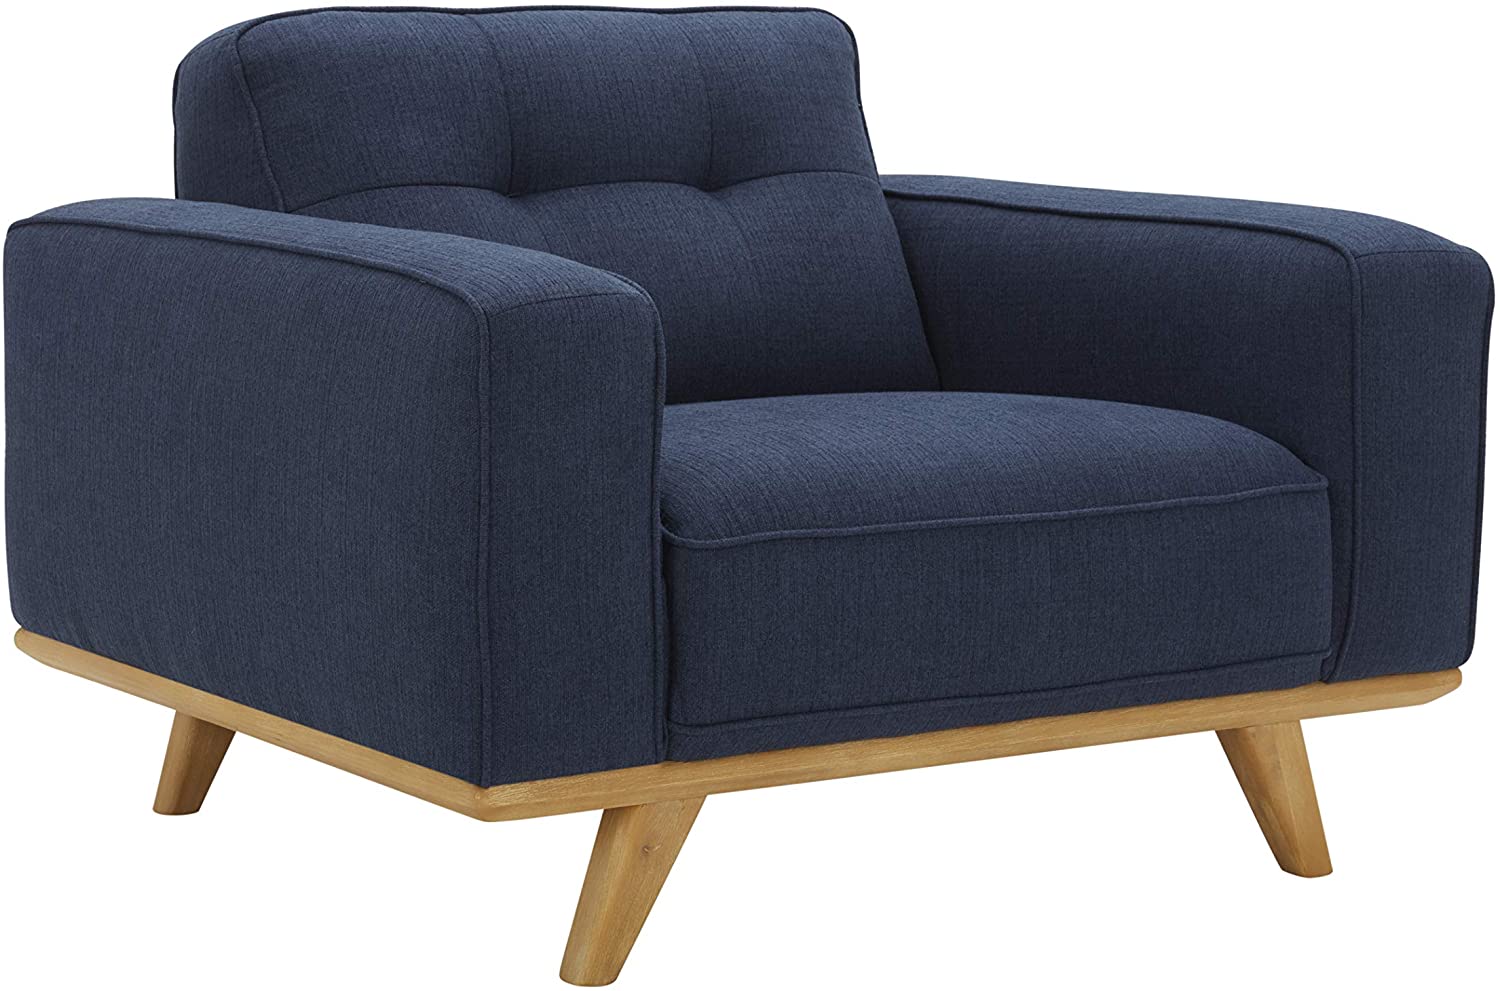 Sofa Chair : Modern Chair with Wood Base